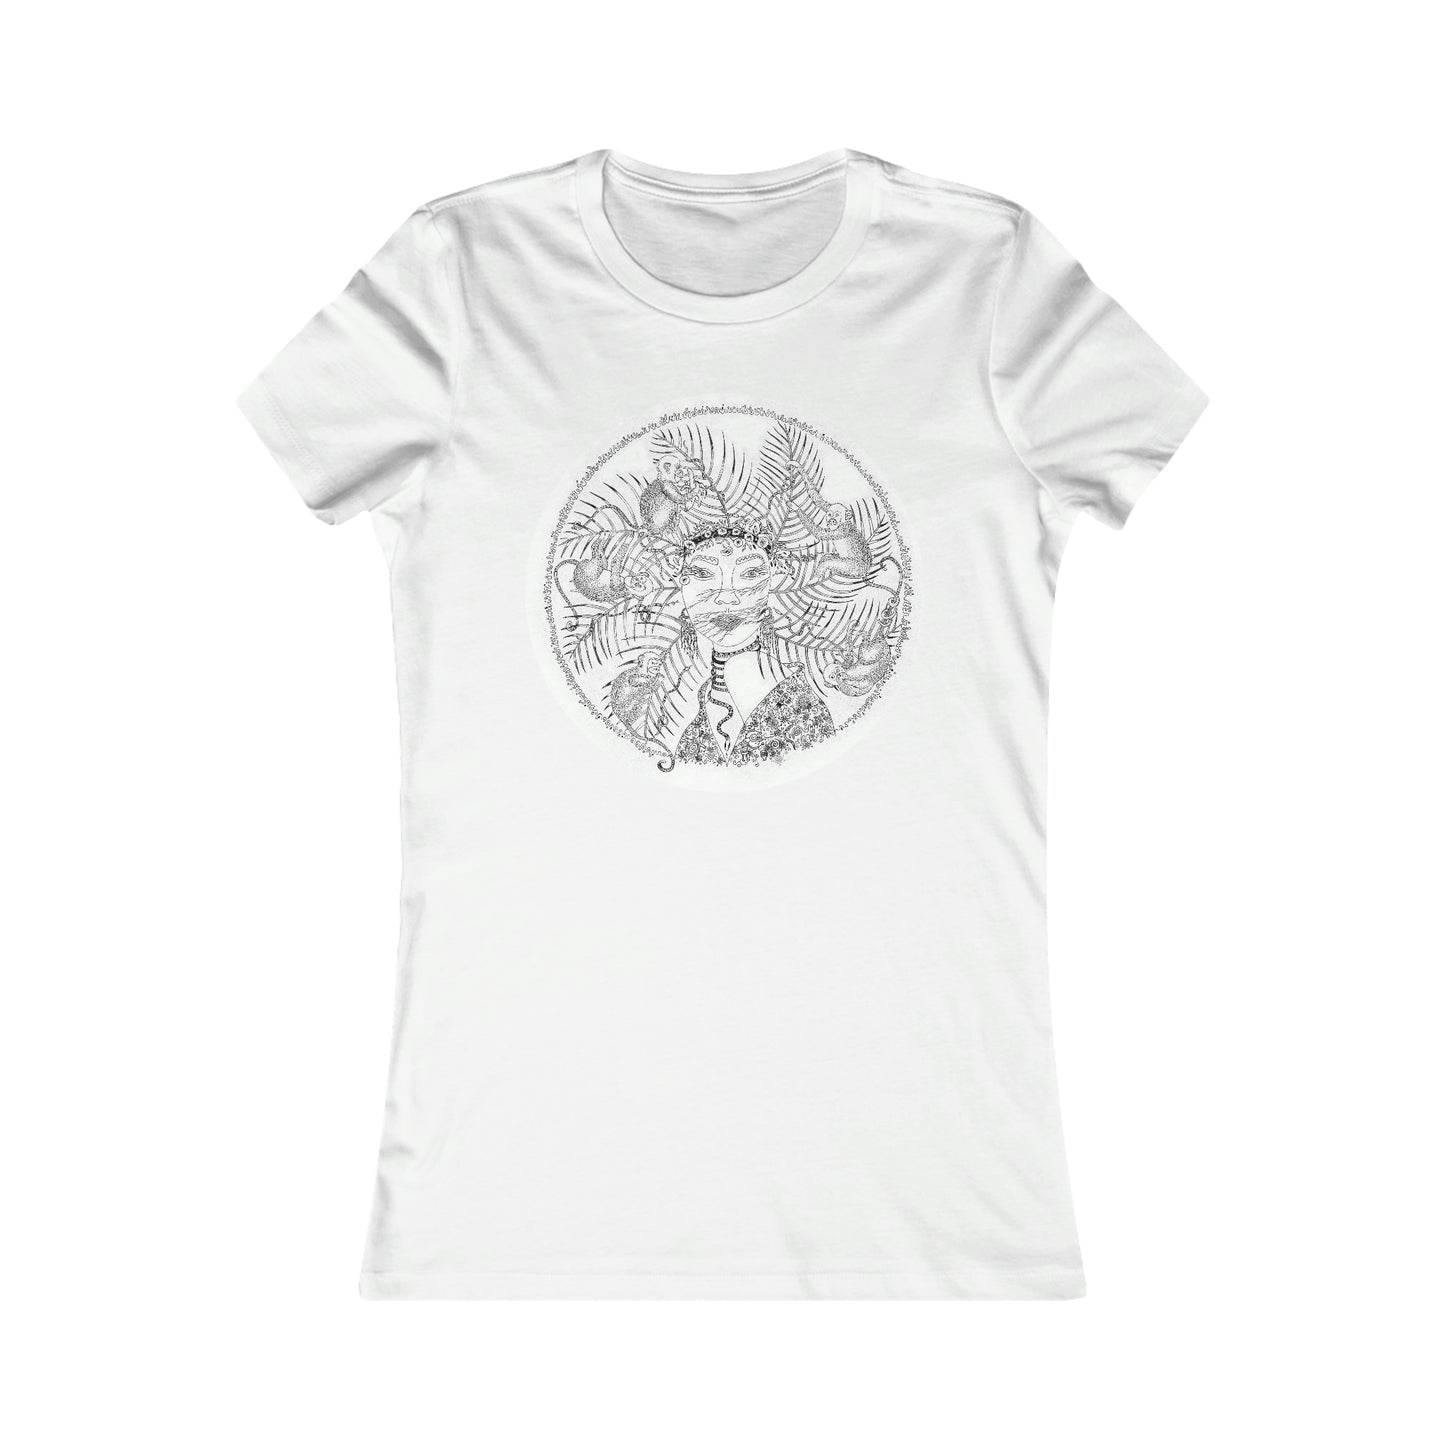 Chinese Zodiac Sign T Shirt (Monkey) Limited Edition